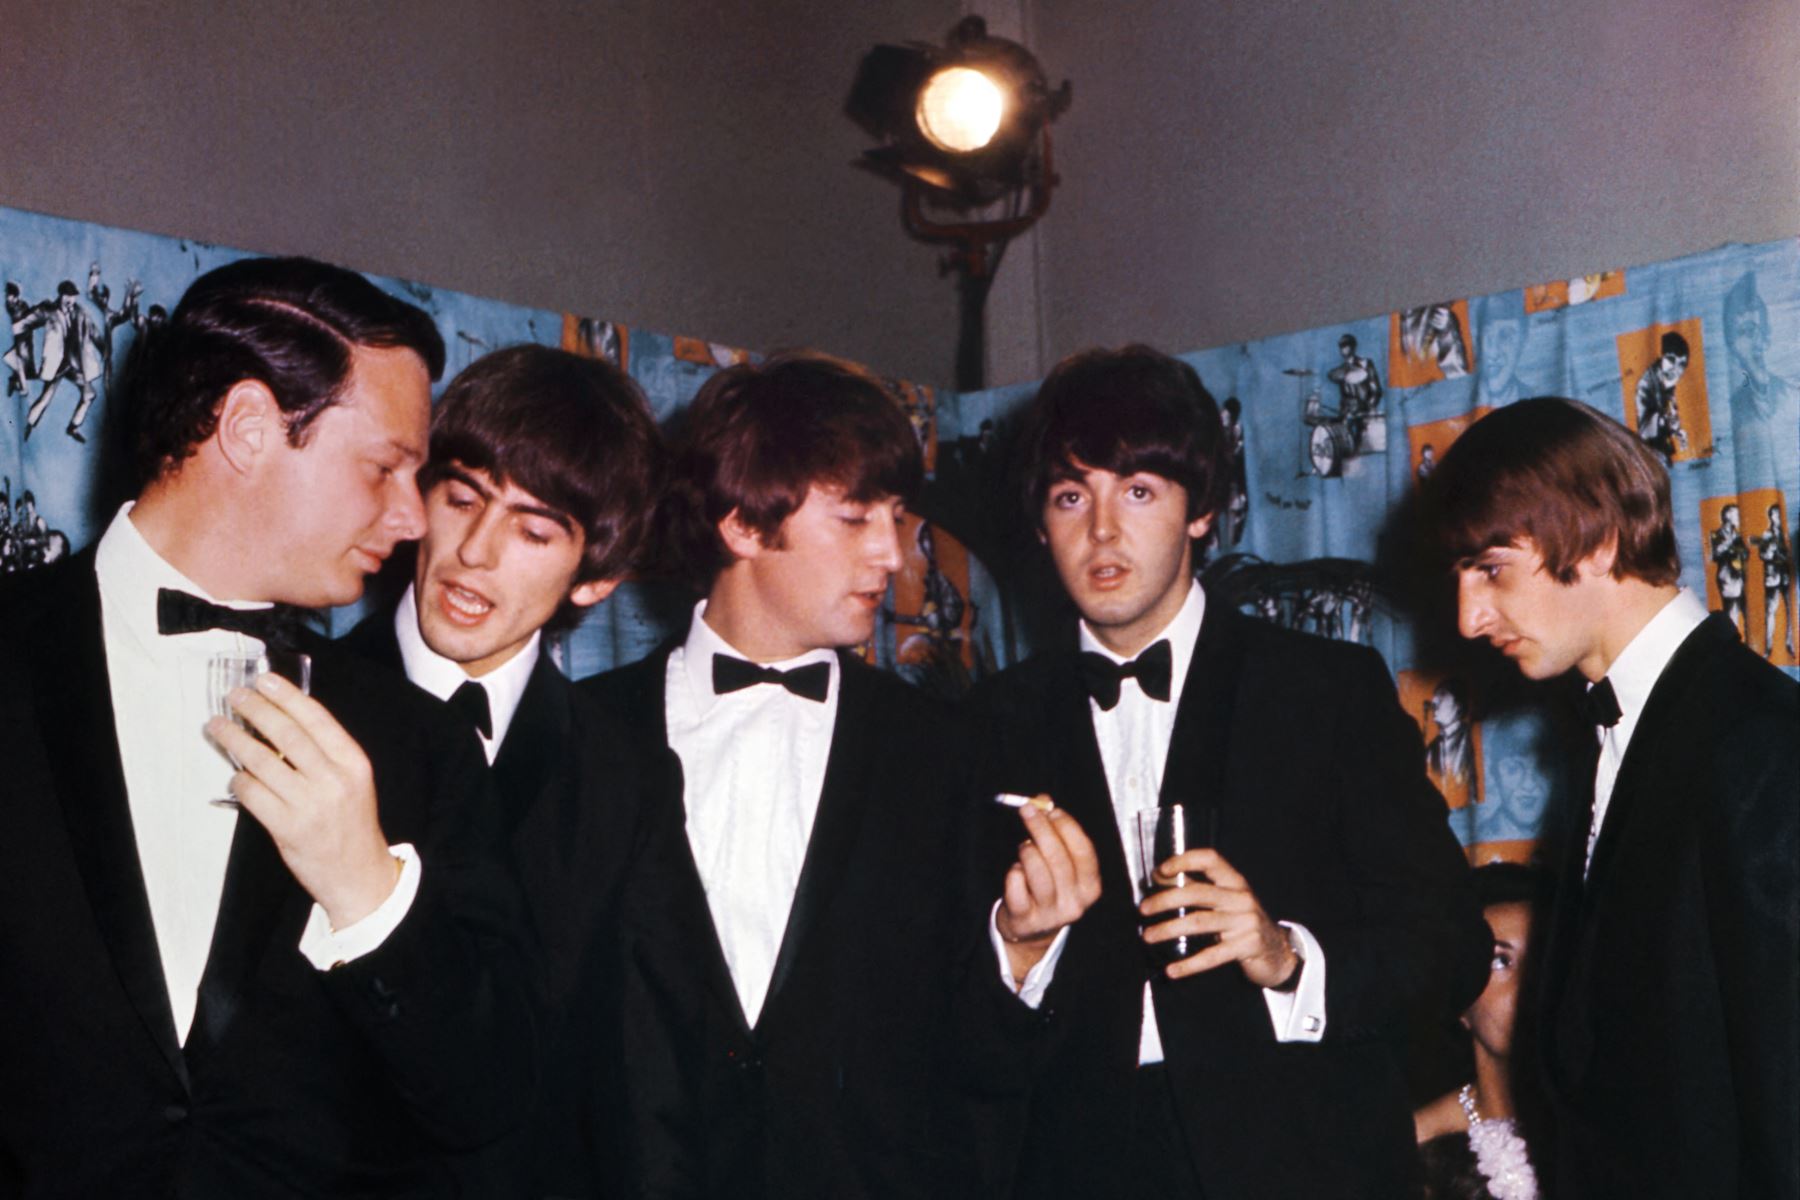 De izquierda a derecha, Brian Epstein, la banda inglesa The Beatles Ringo Starr, John Lennon, Paul McCartney y George Harrison en la foto durante el estreno de "Hard day